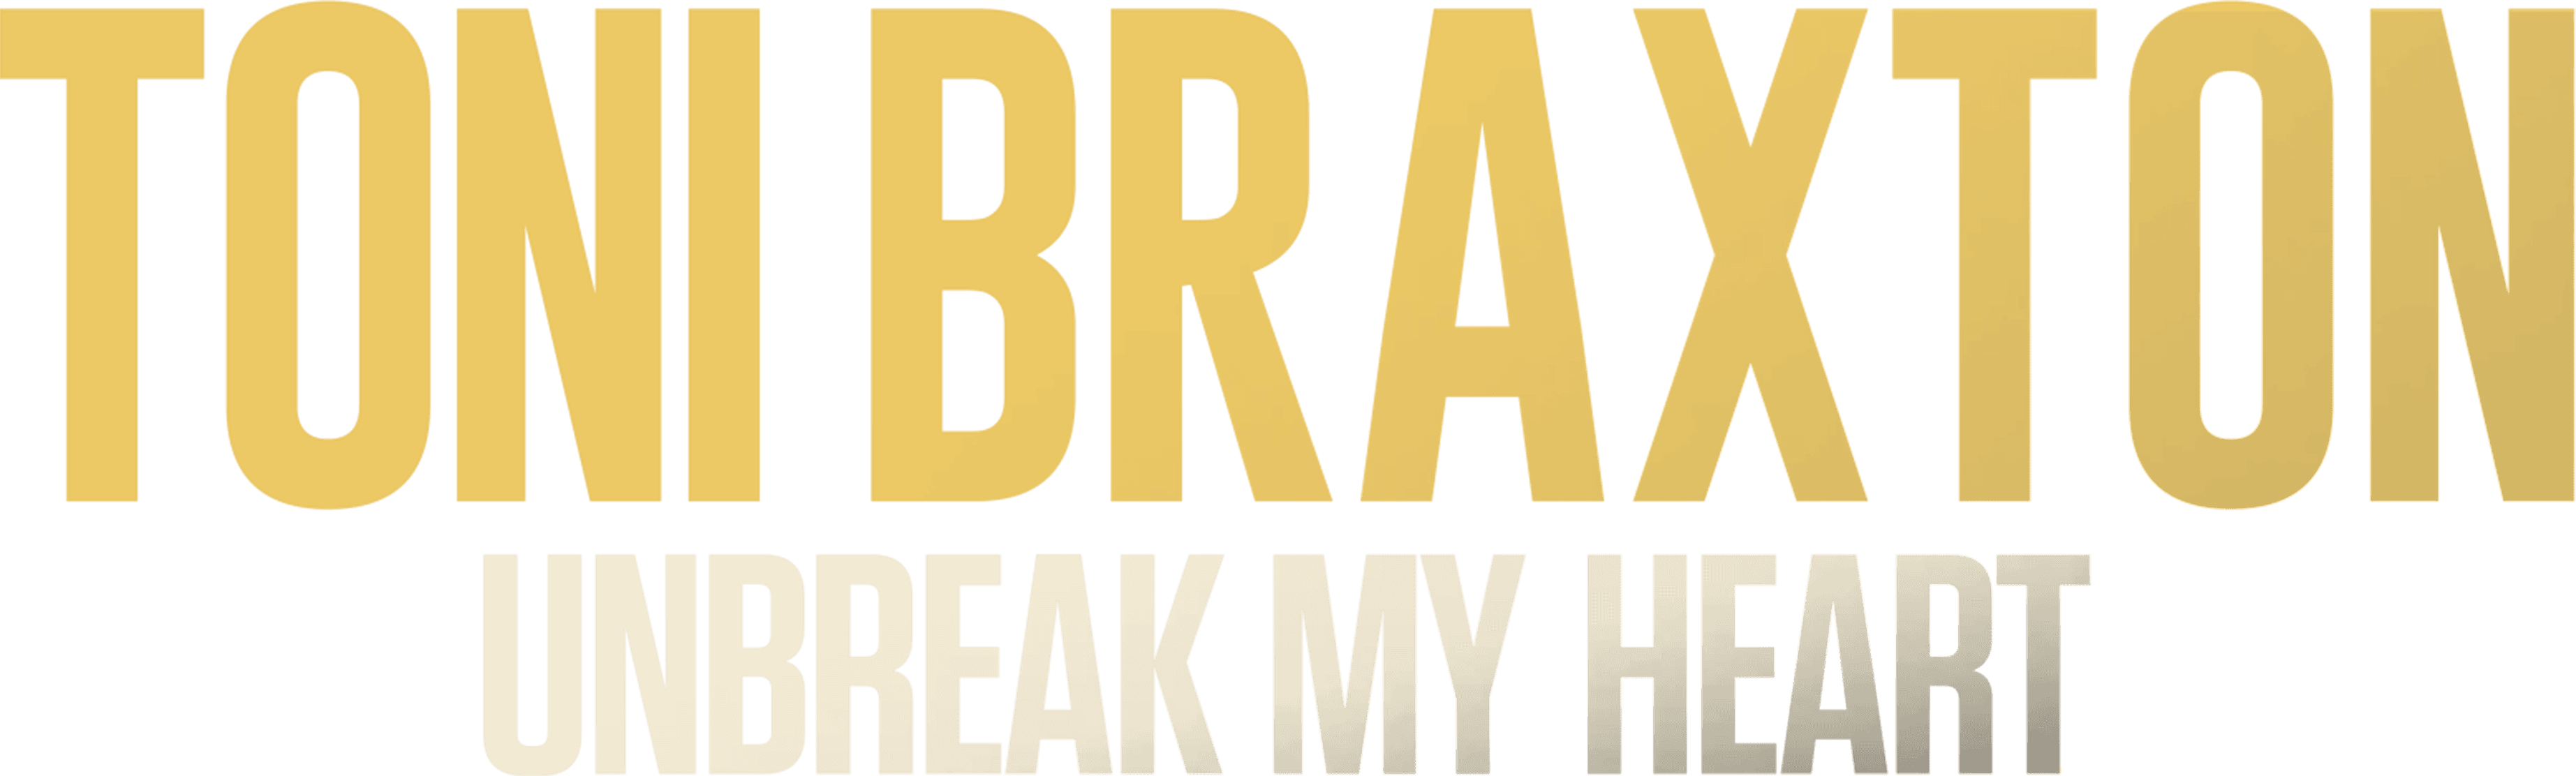 Toni Braxton: Unbreak My Heart logo